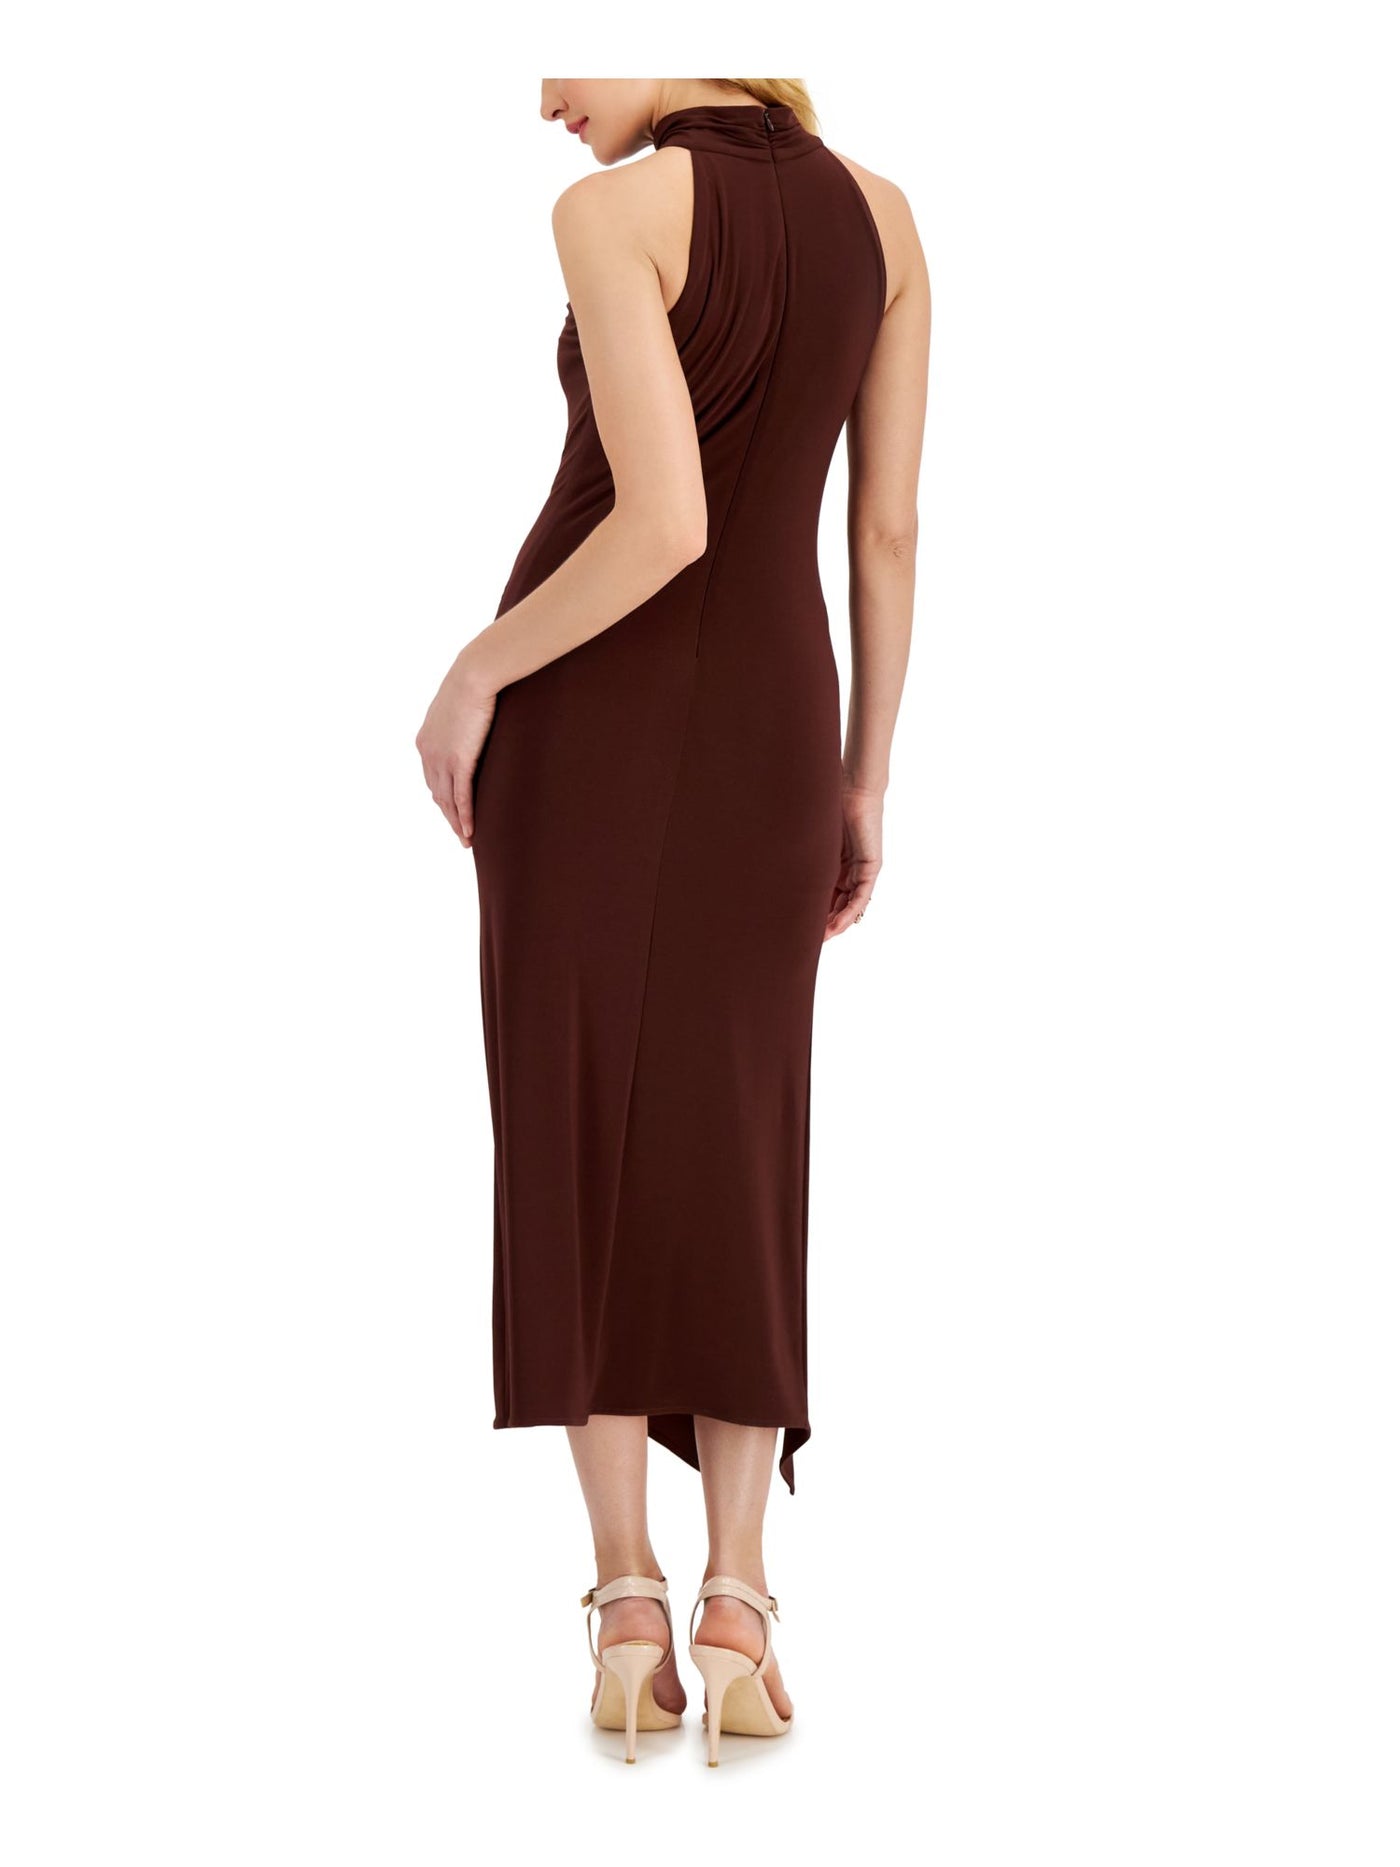 TAYLOR Womens Brown Zippered Slitted Shirred Side Asymmetrical Hem Sleeveless Mock Neck Midi Party Sheath Dress 4